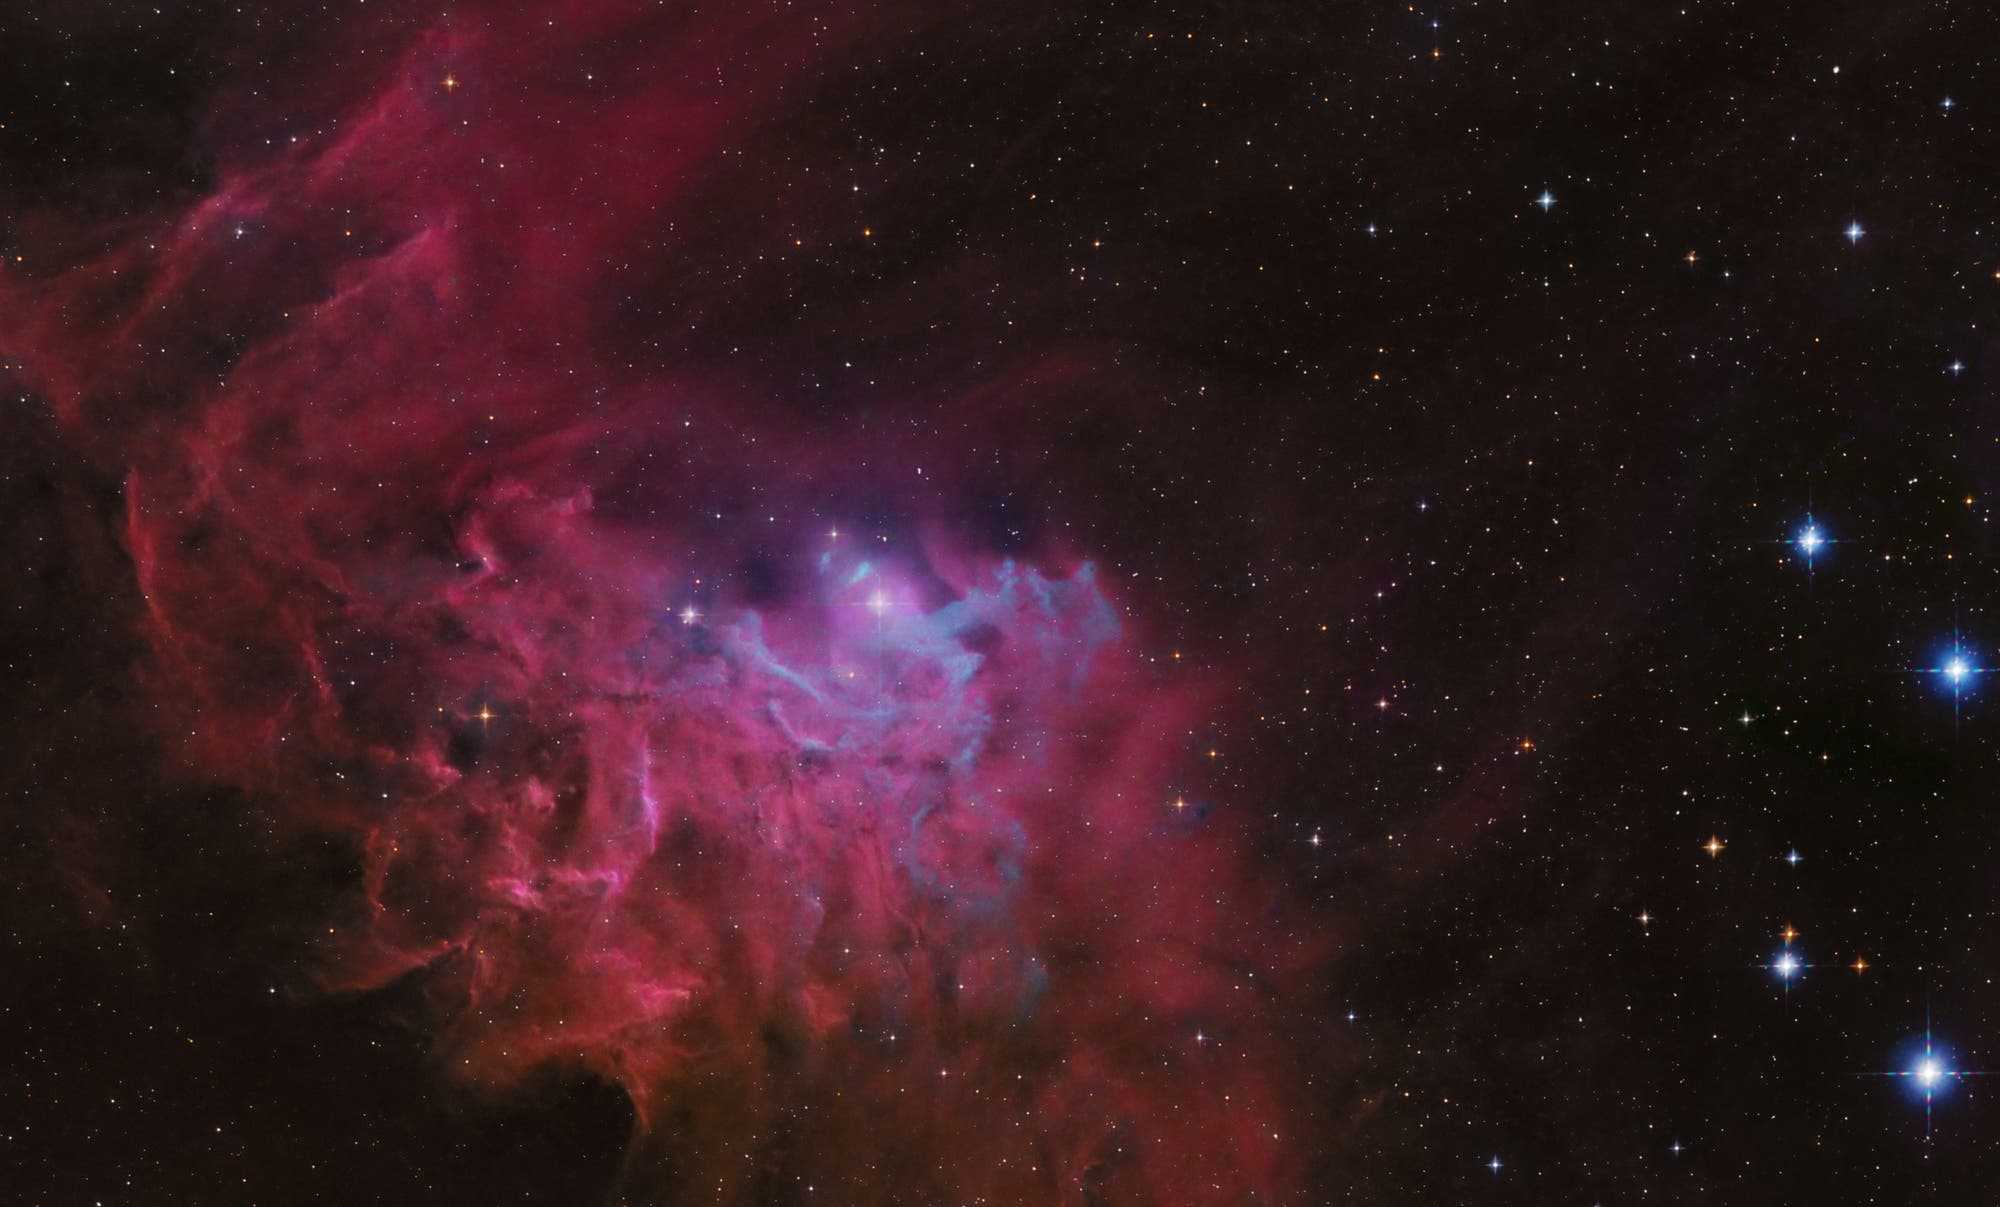 The Flaming Star Nebula IC 405 